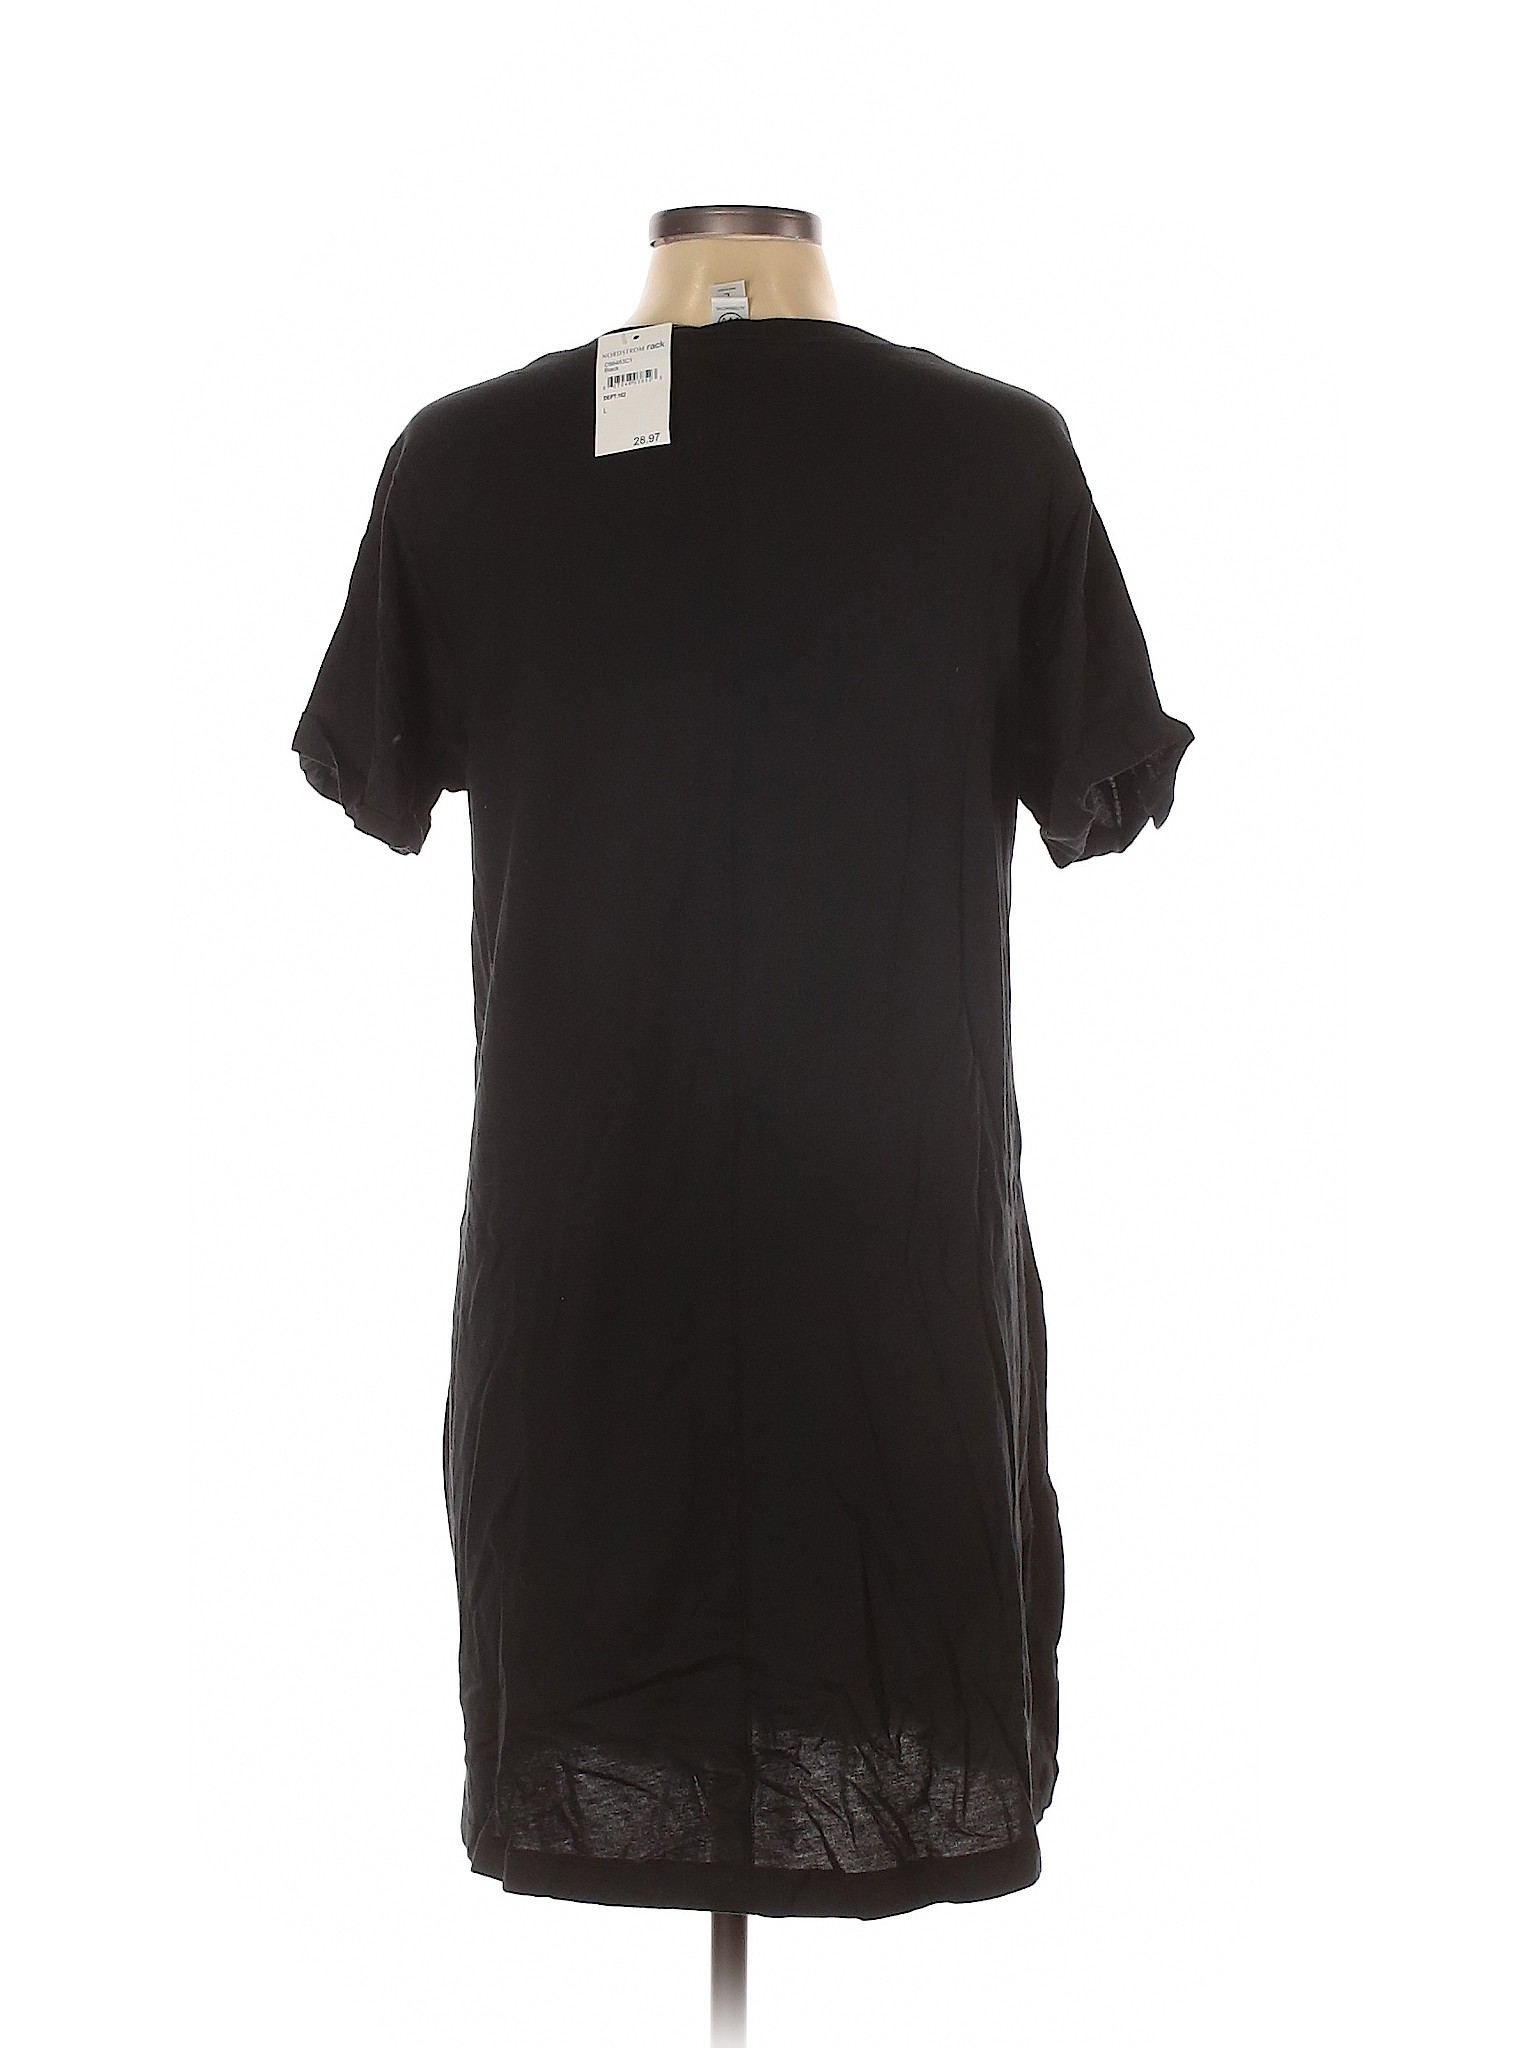 NWT Nordstrom Rack Women Black Casual Dress L | eBay